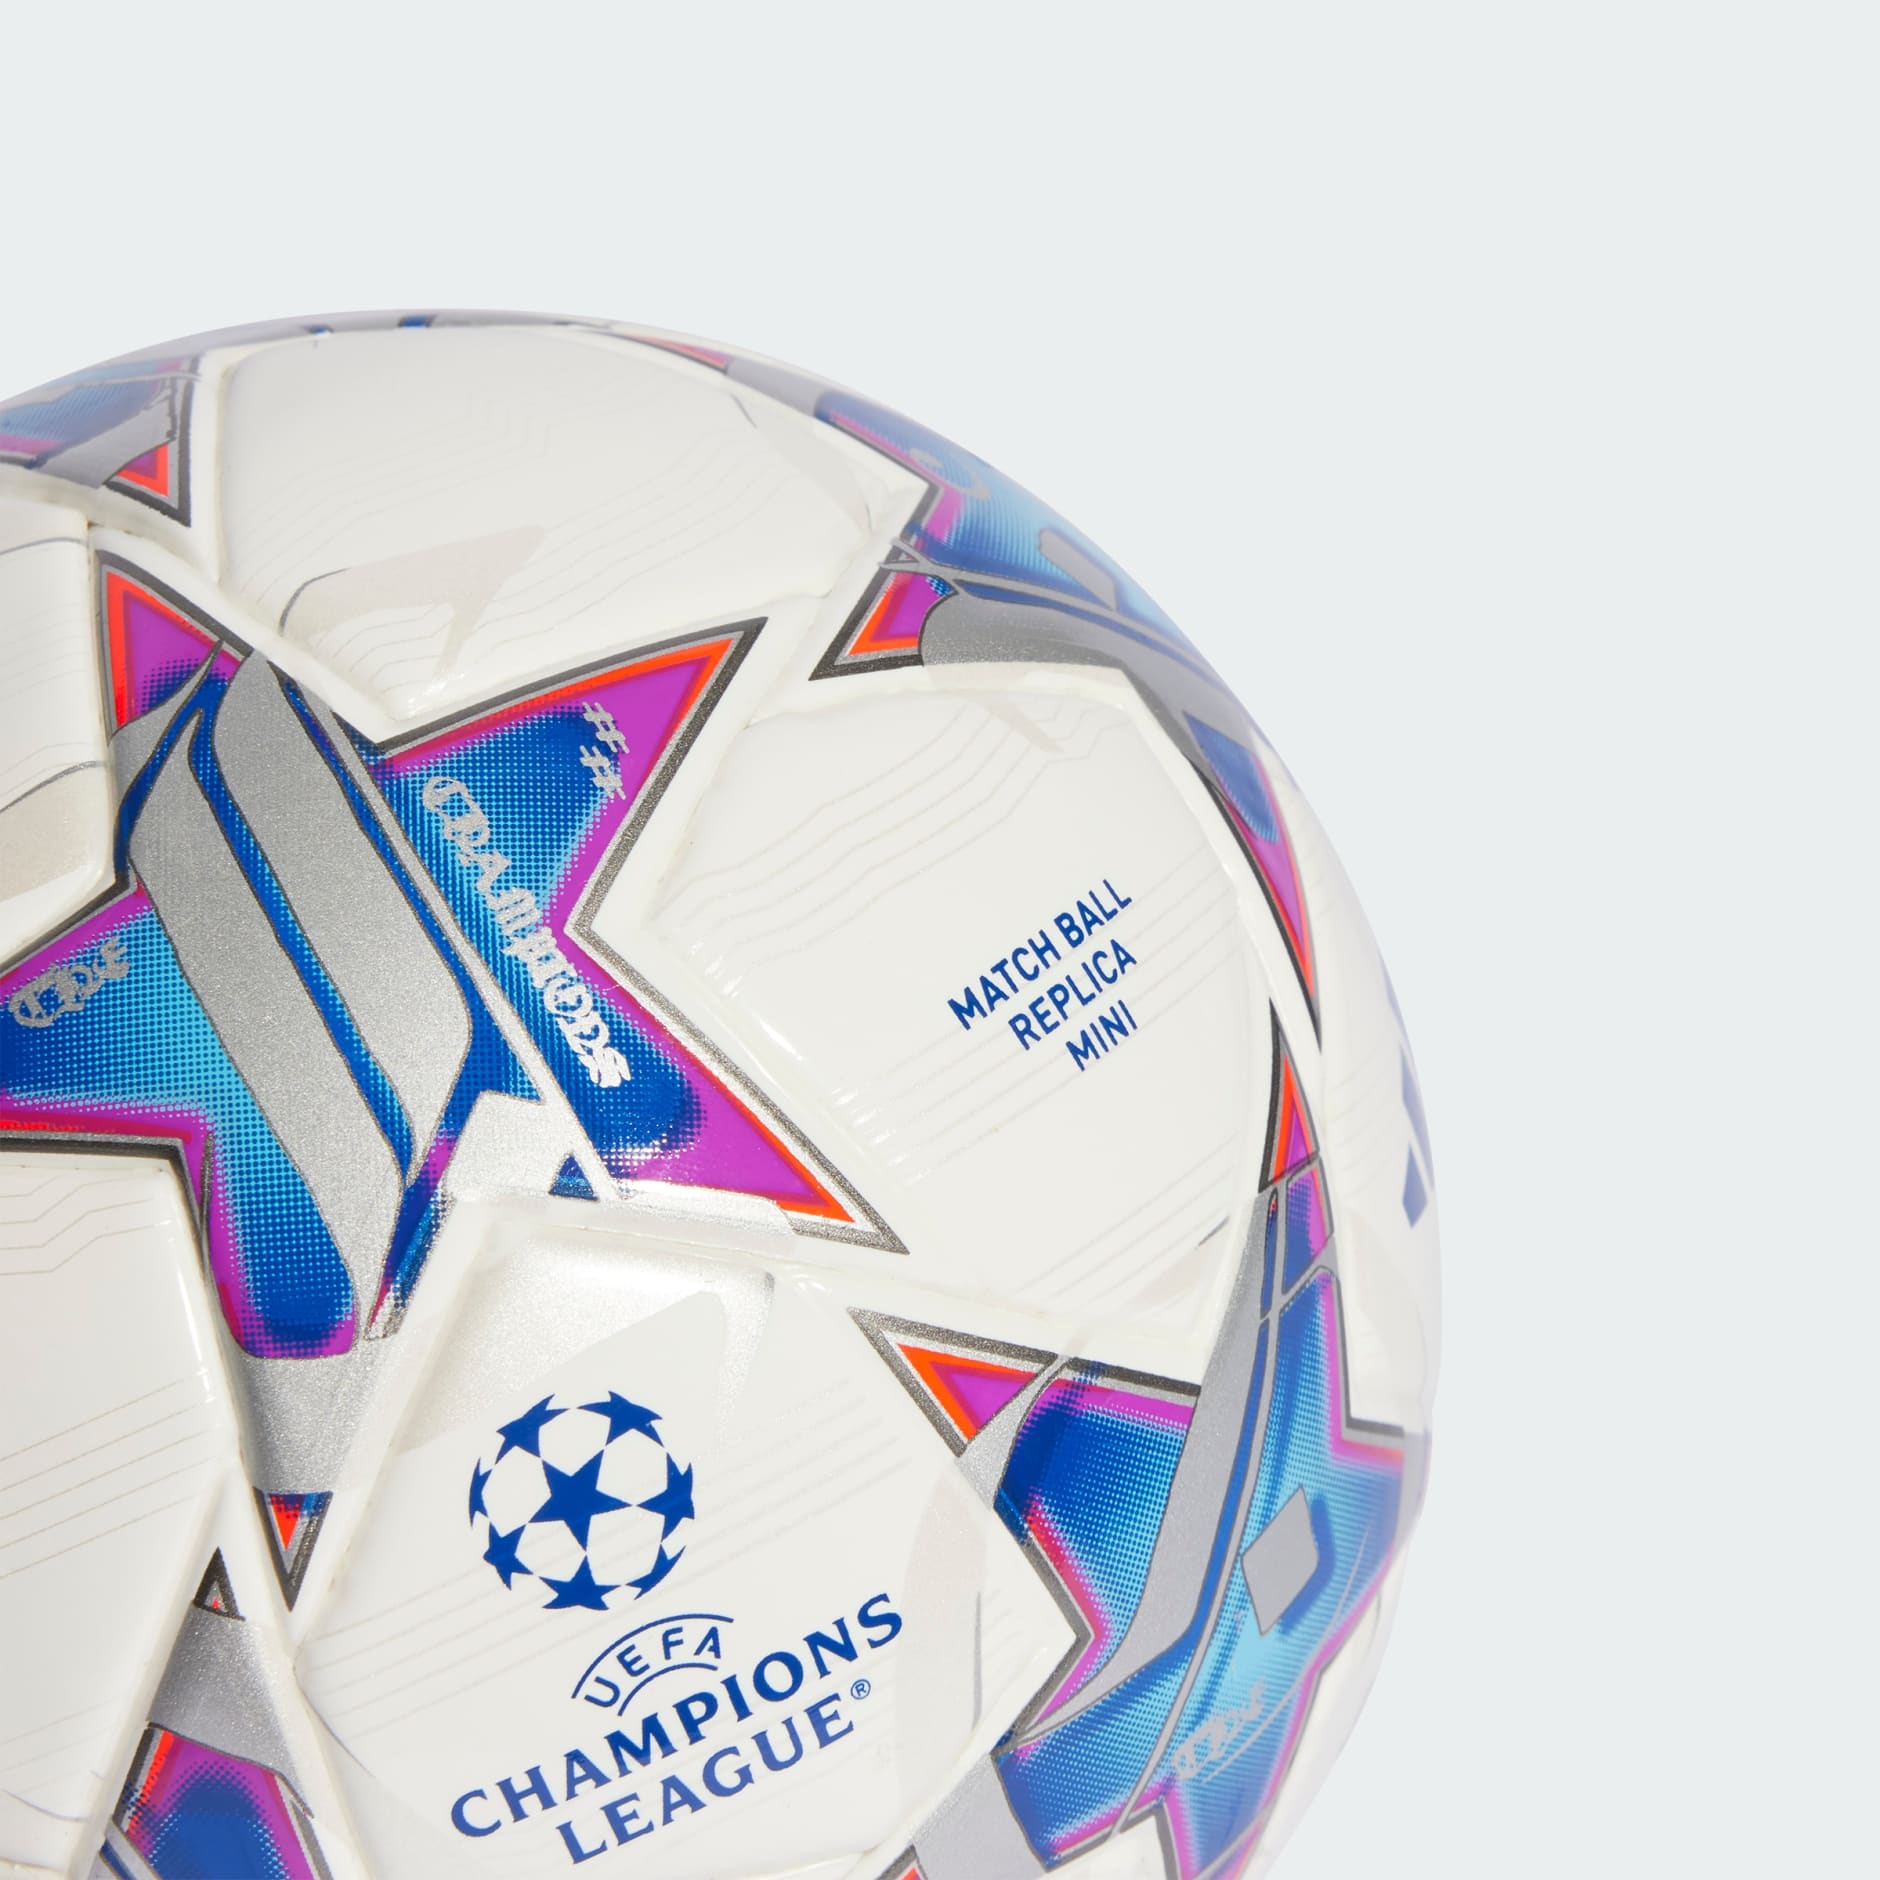 adidas Ballon Champions League 2020 Mini - Blanc/Violet/Bleu/Bleu Marine